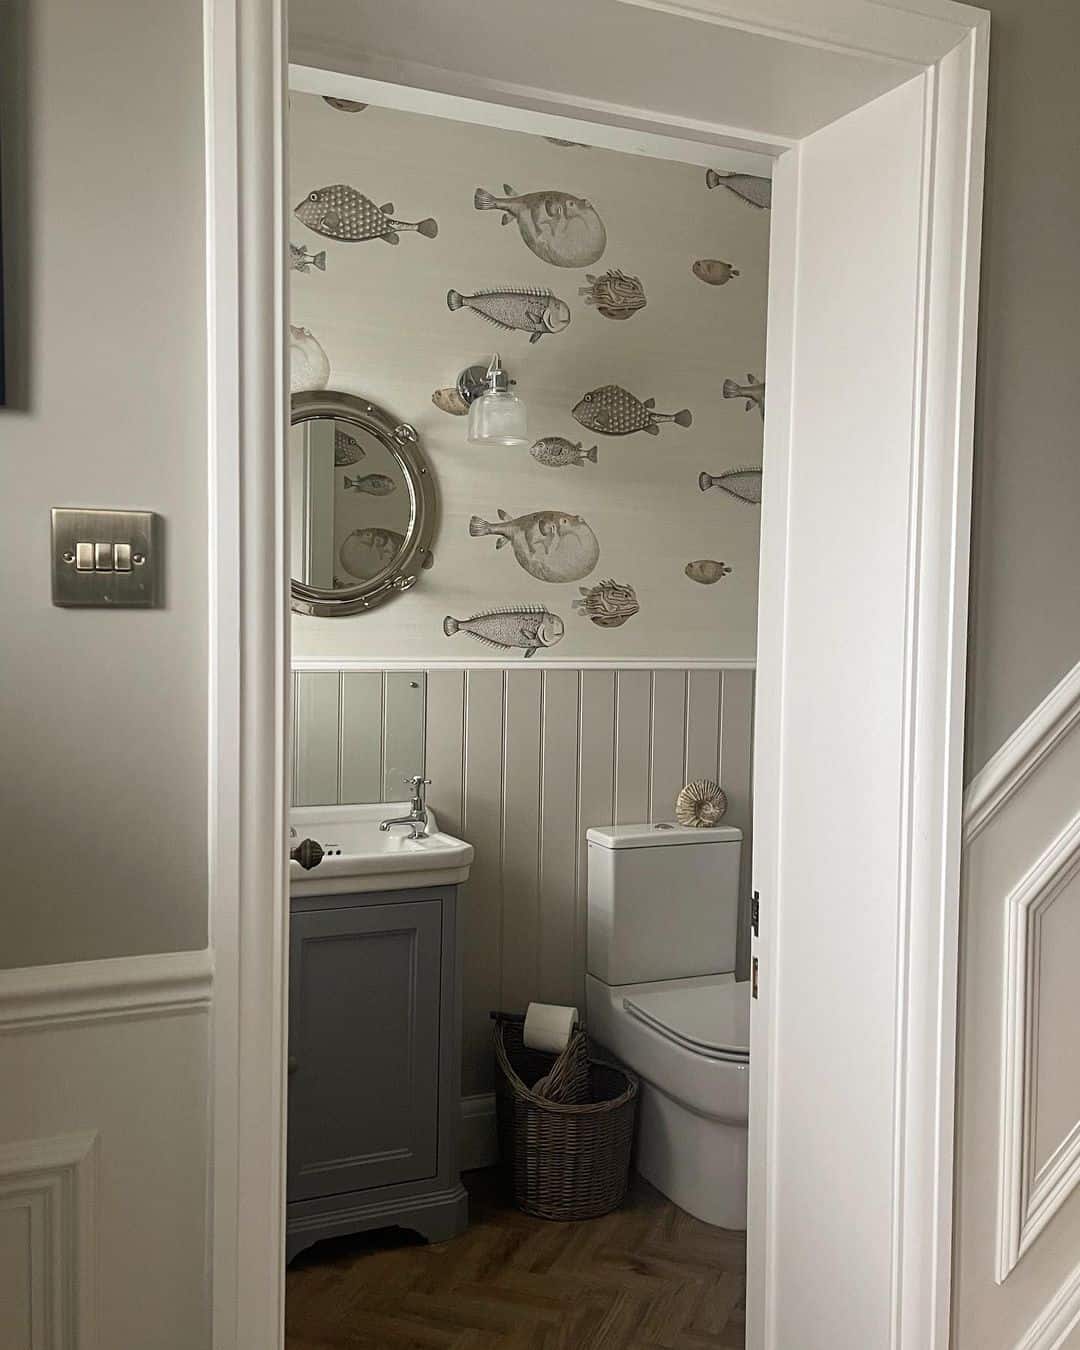 Blowfish Wallpaper Is the Delightfully Random Bathroom Trend We Needed